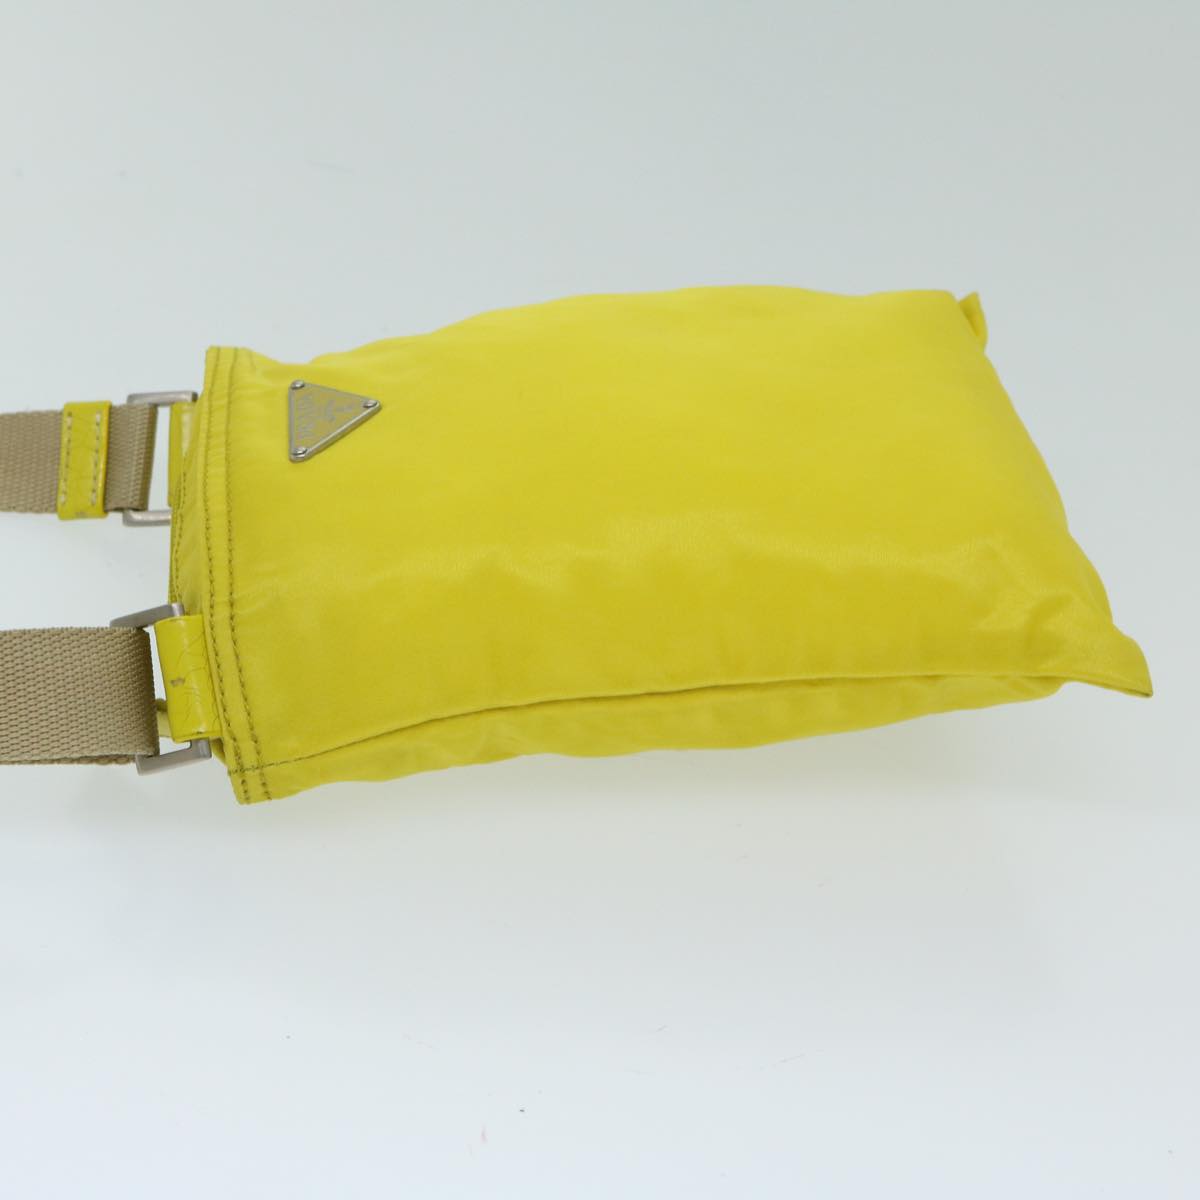 PRADA Shoulder Bag Nylon Yellow Auth 67212